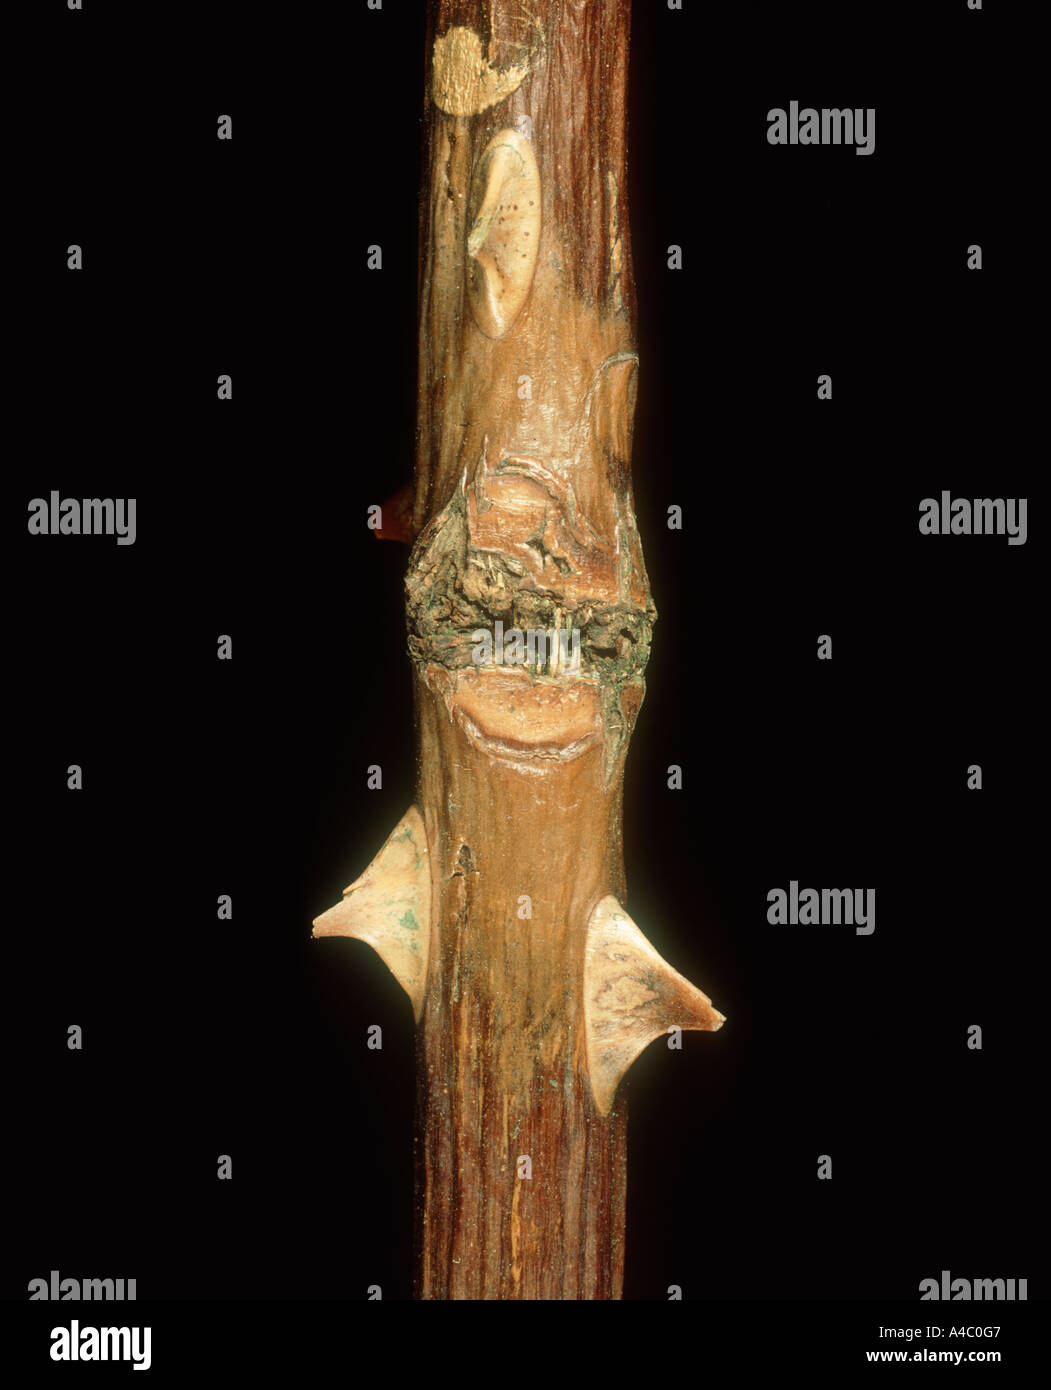 Stem canker Clethridium corticola lesion on rose stem Stock Photo